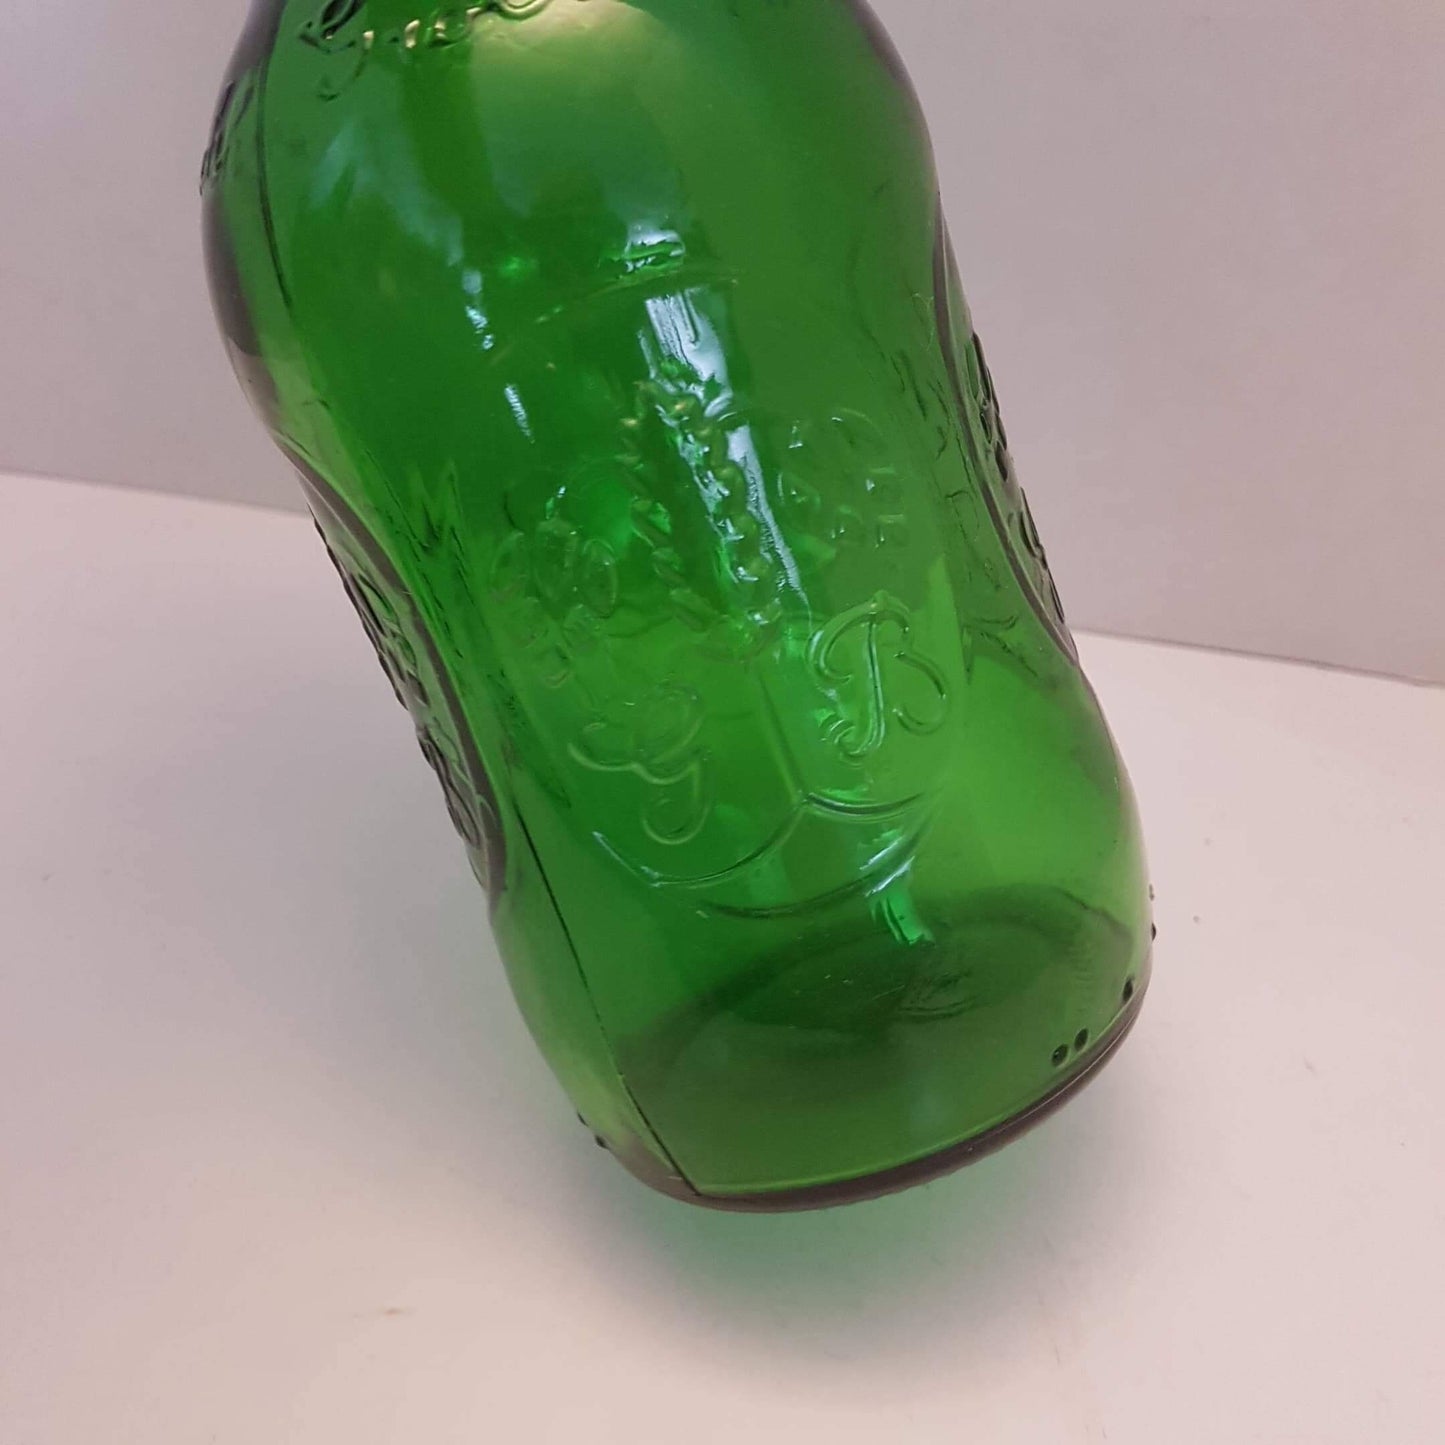 vintage antique grolsch glass bottle glass beer with porcelain swing cap